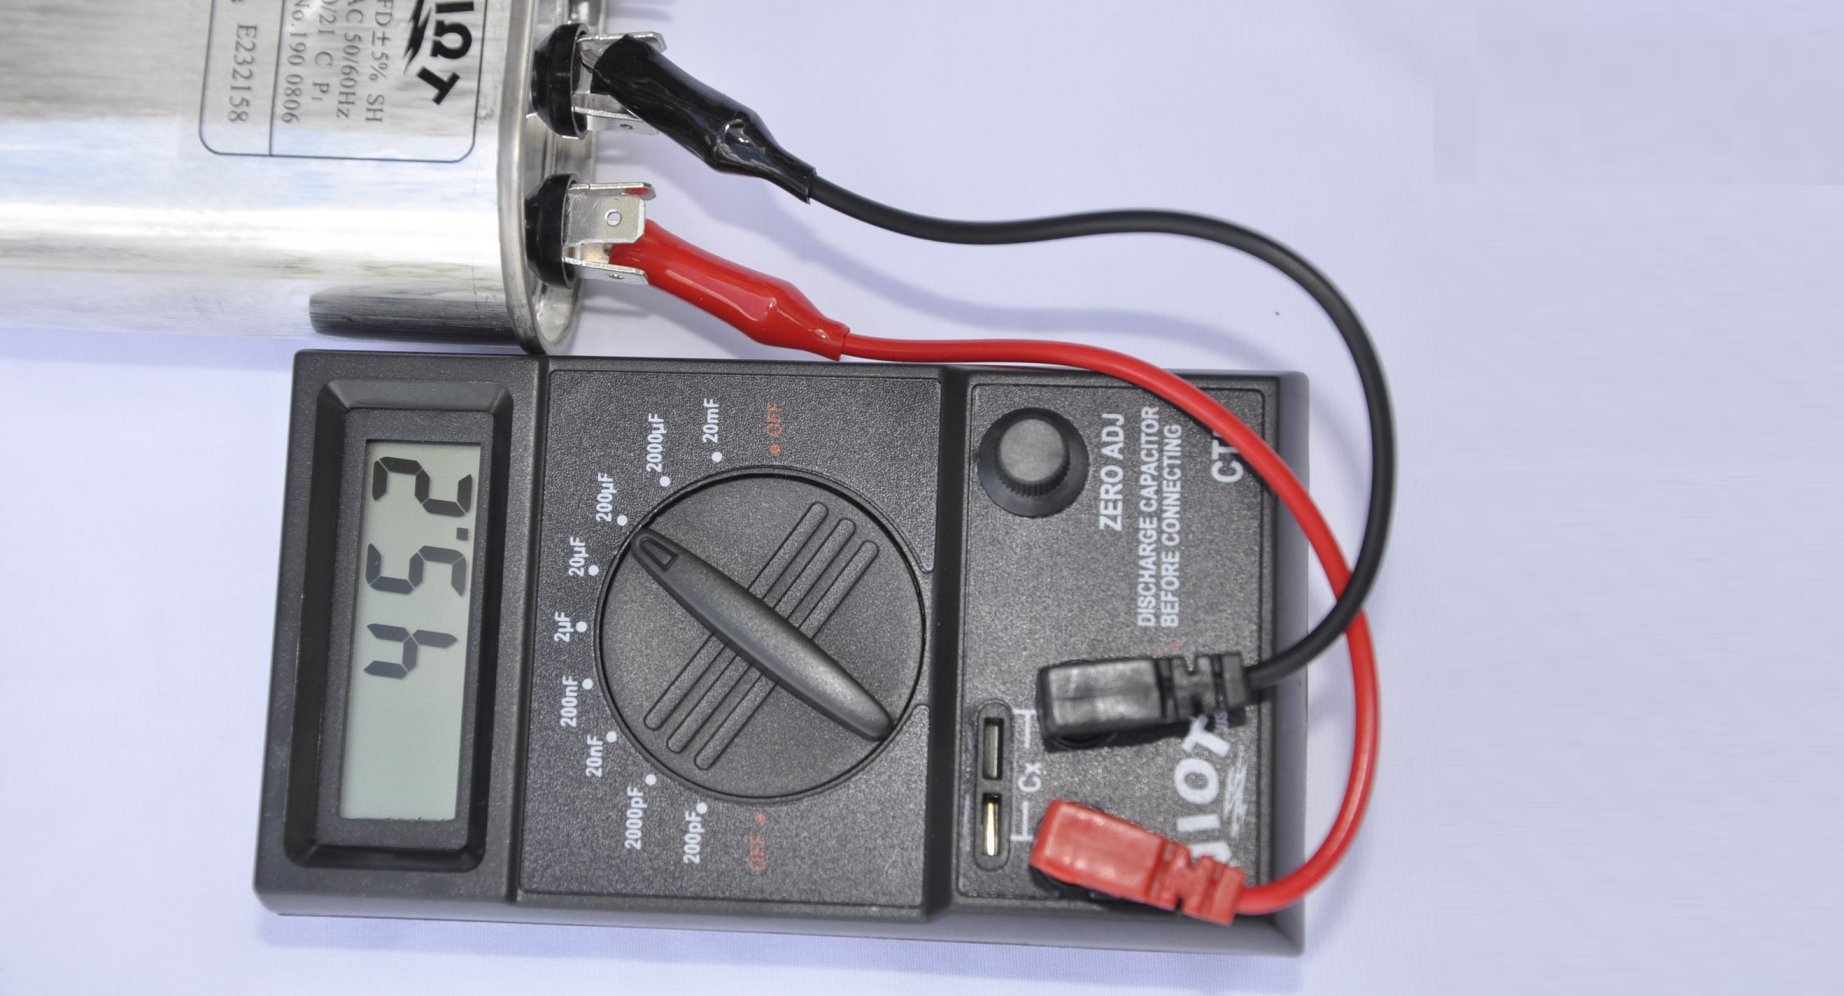 kontrollera kondensatorn med en multimeter